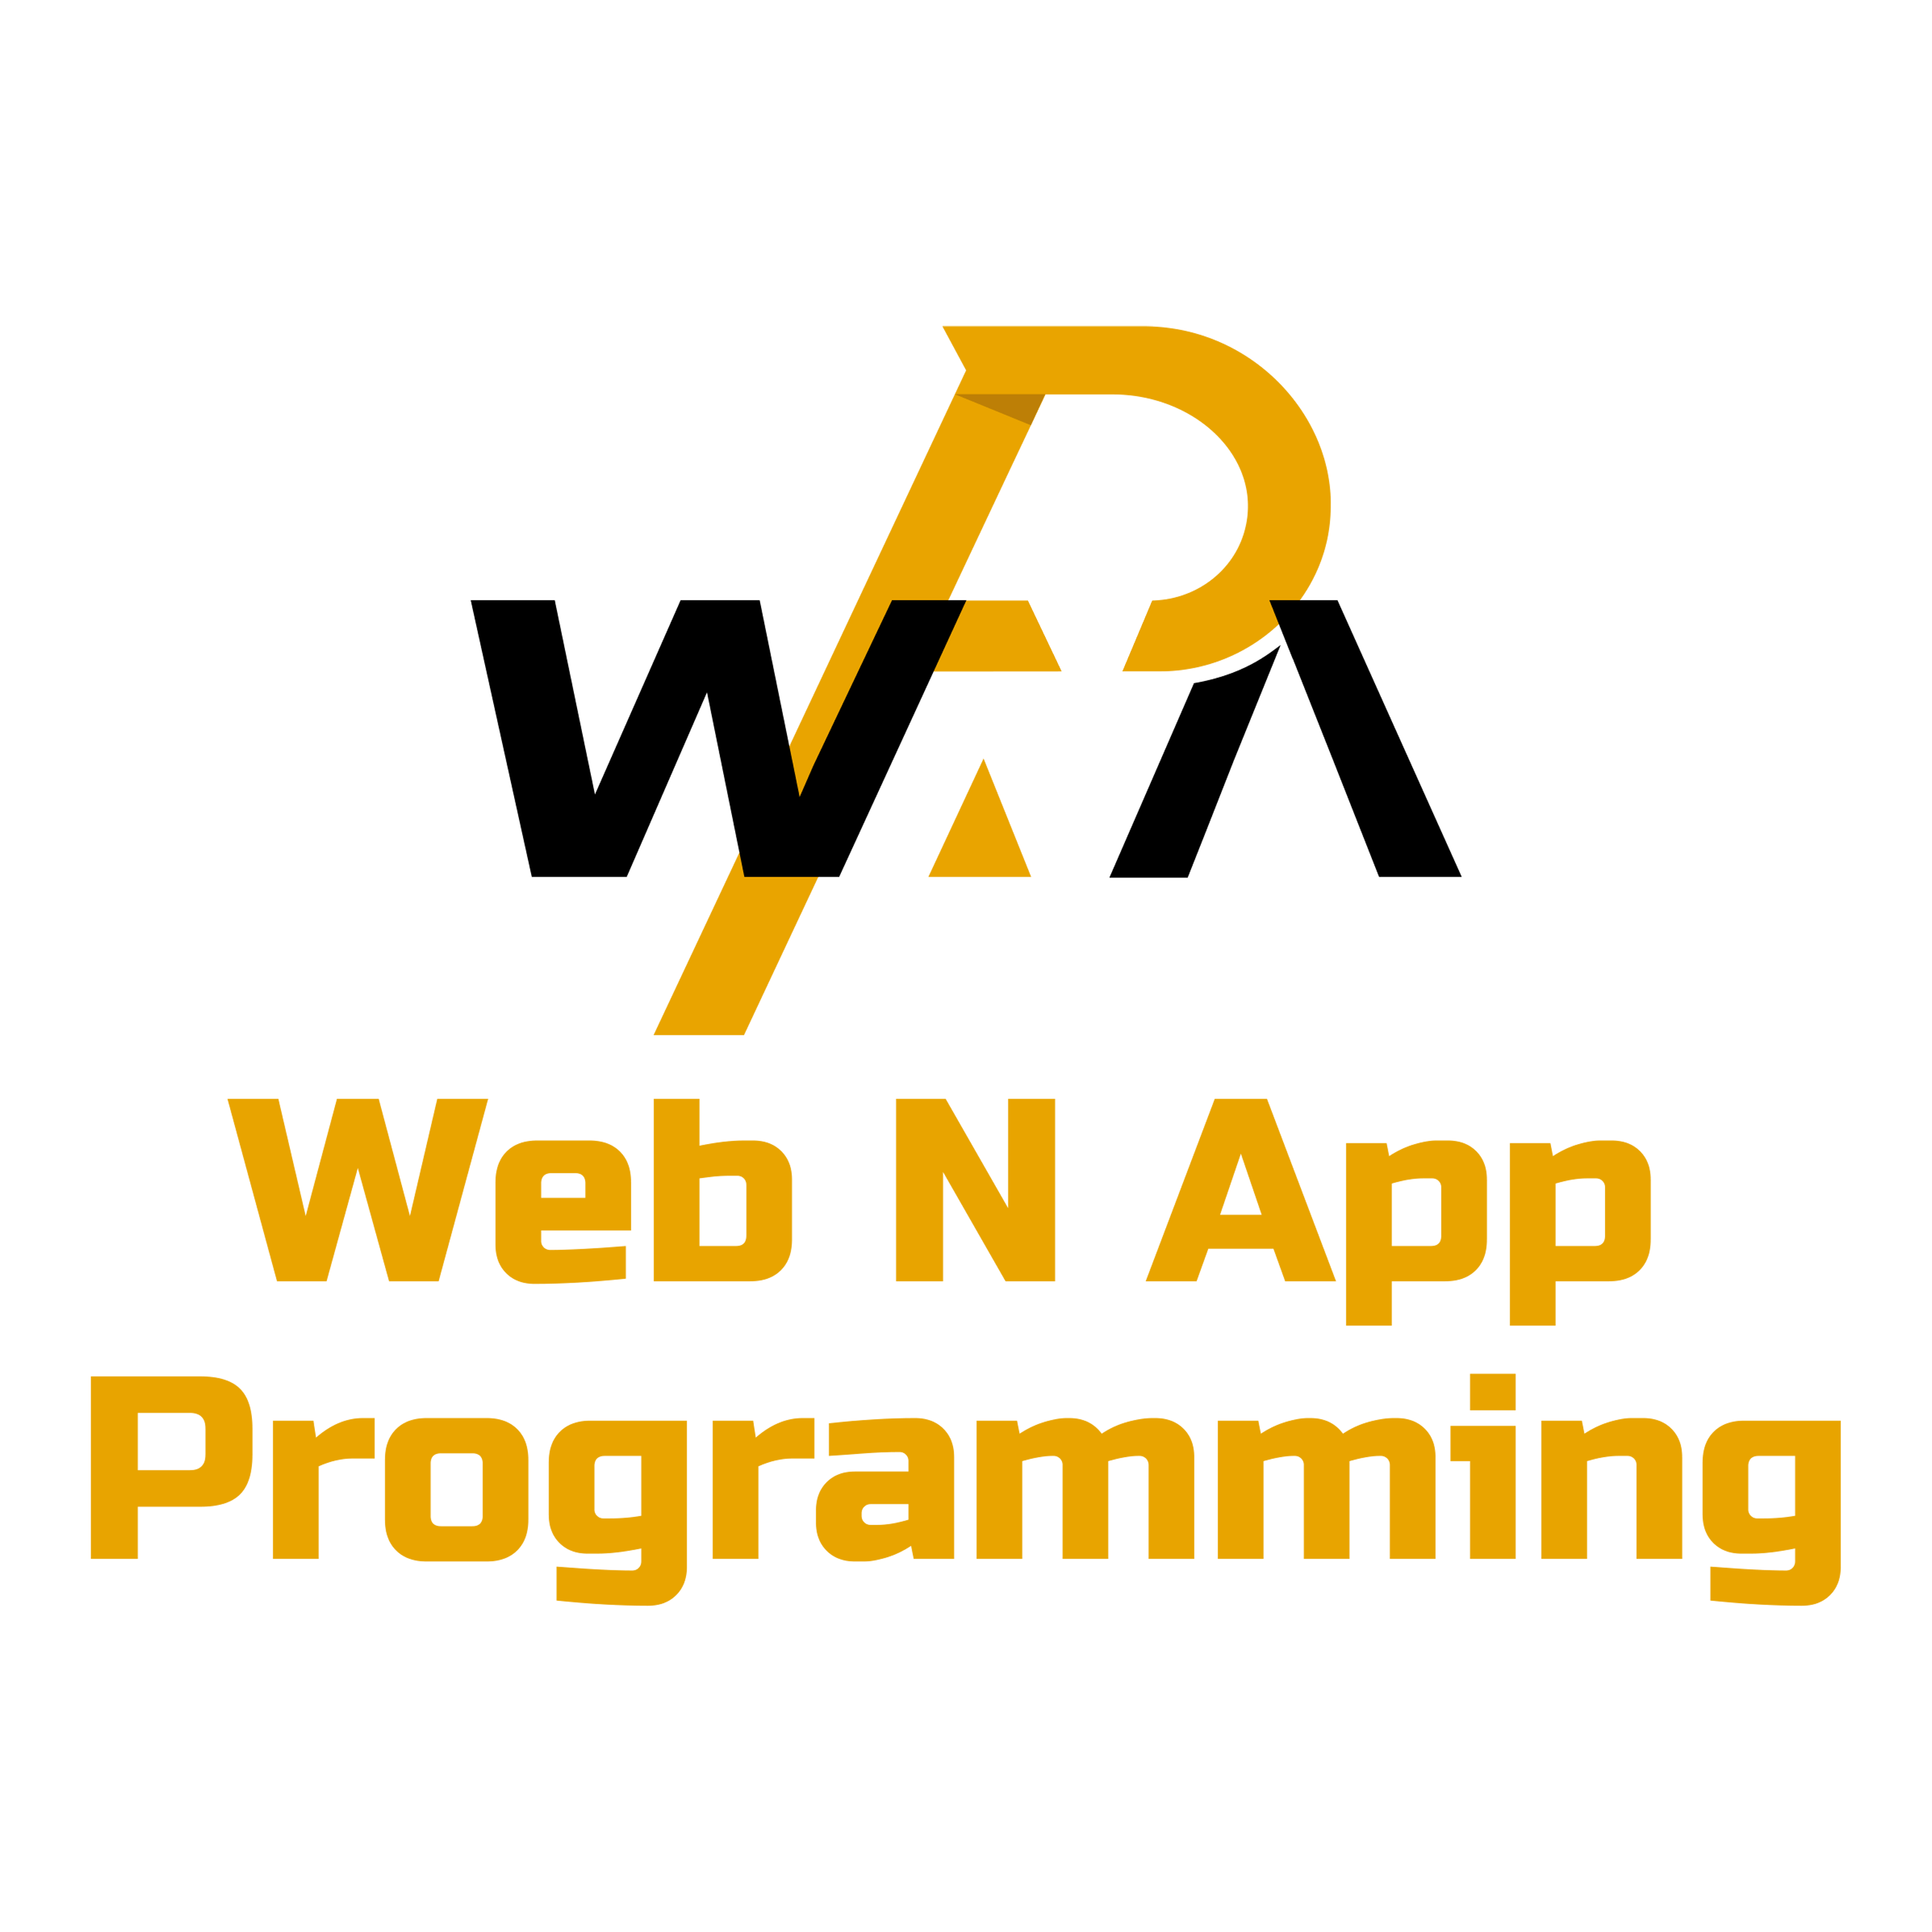 Web N App Programming Logo